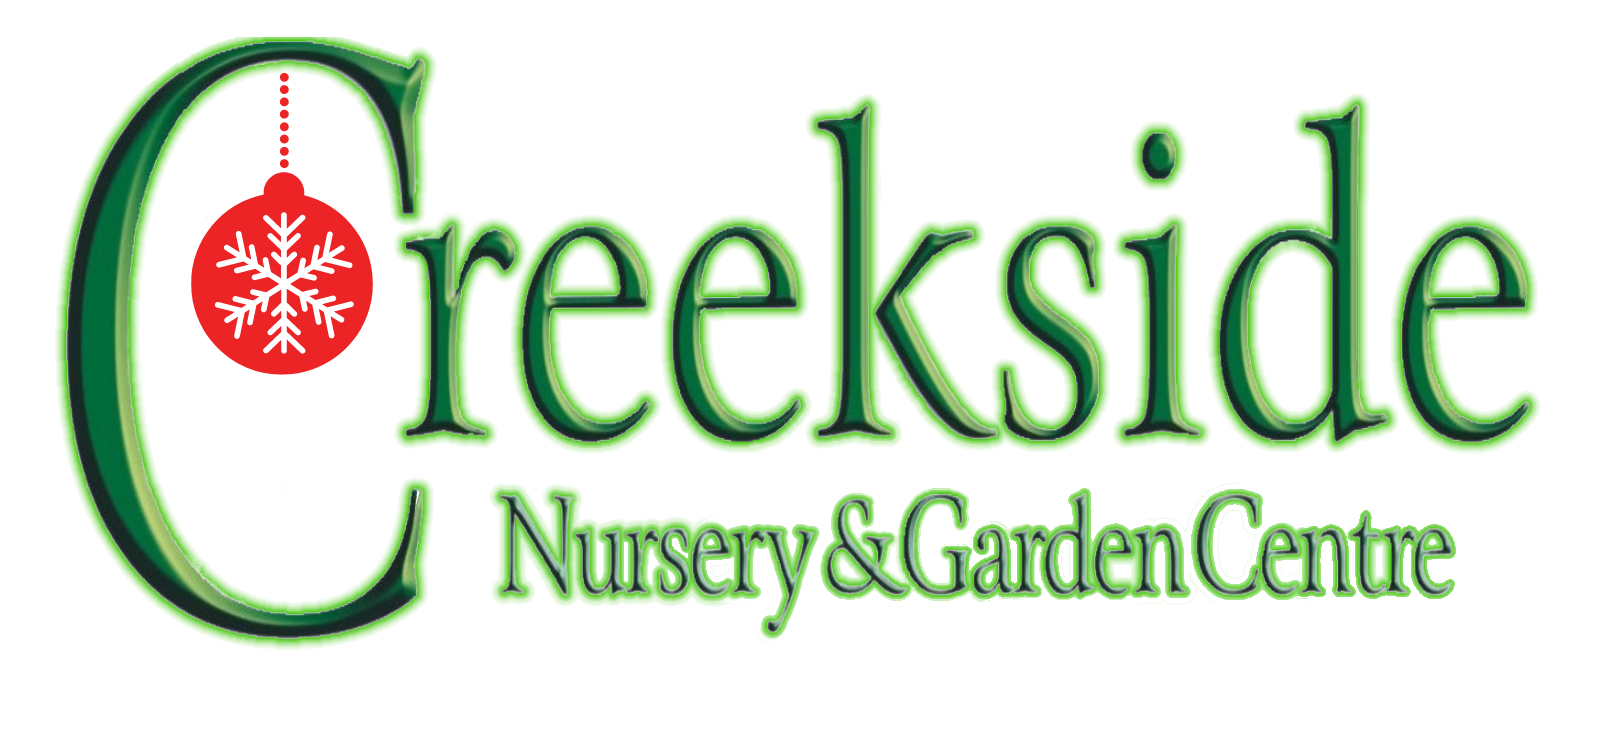 Creekside Nursery & Garden Centre